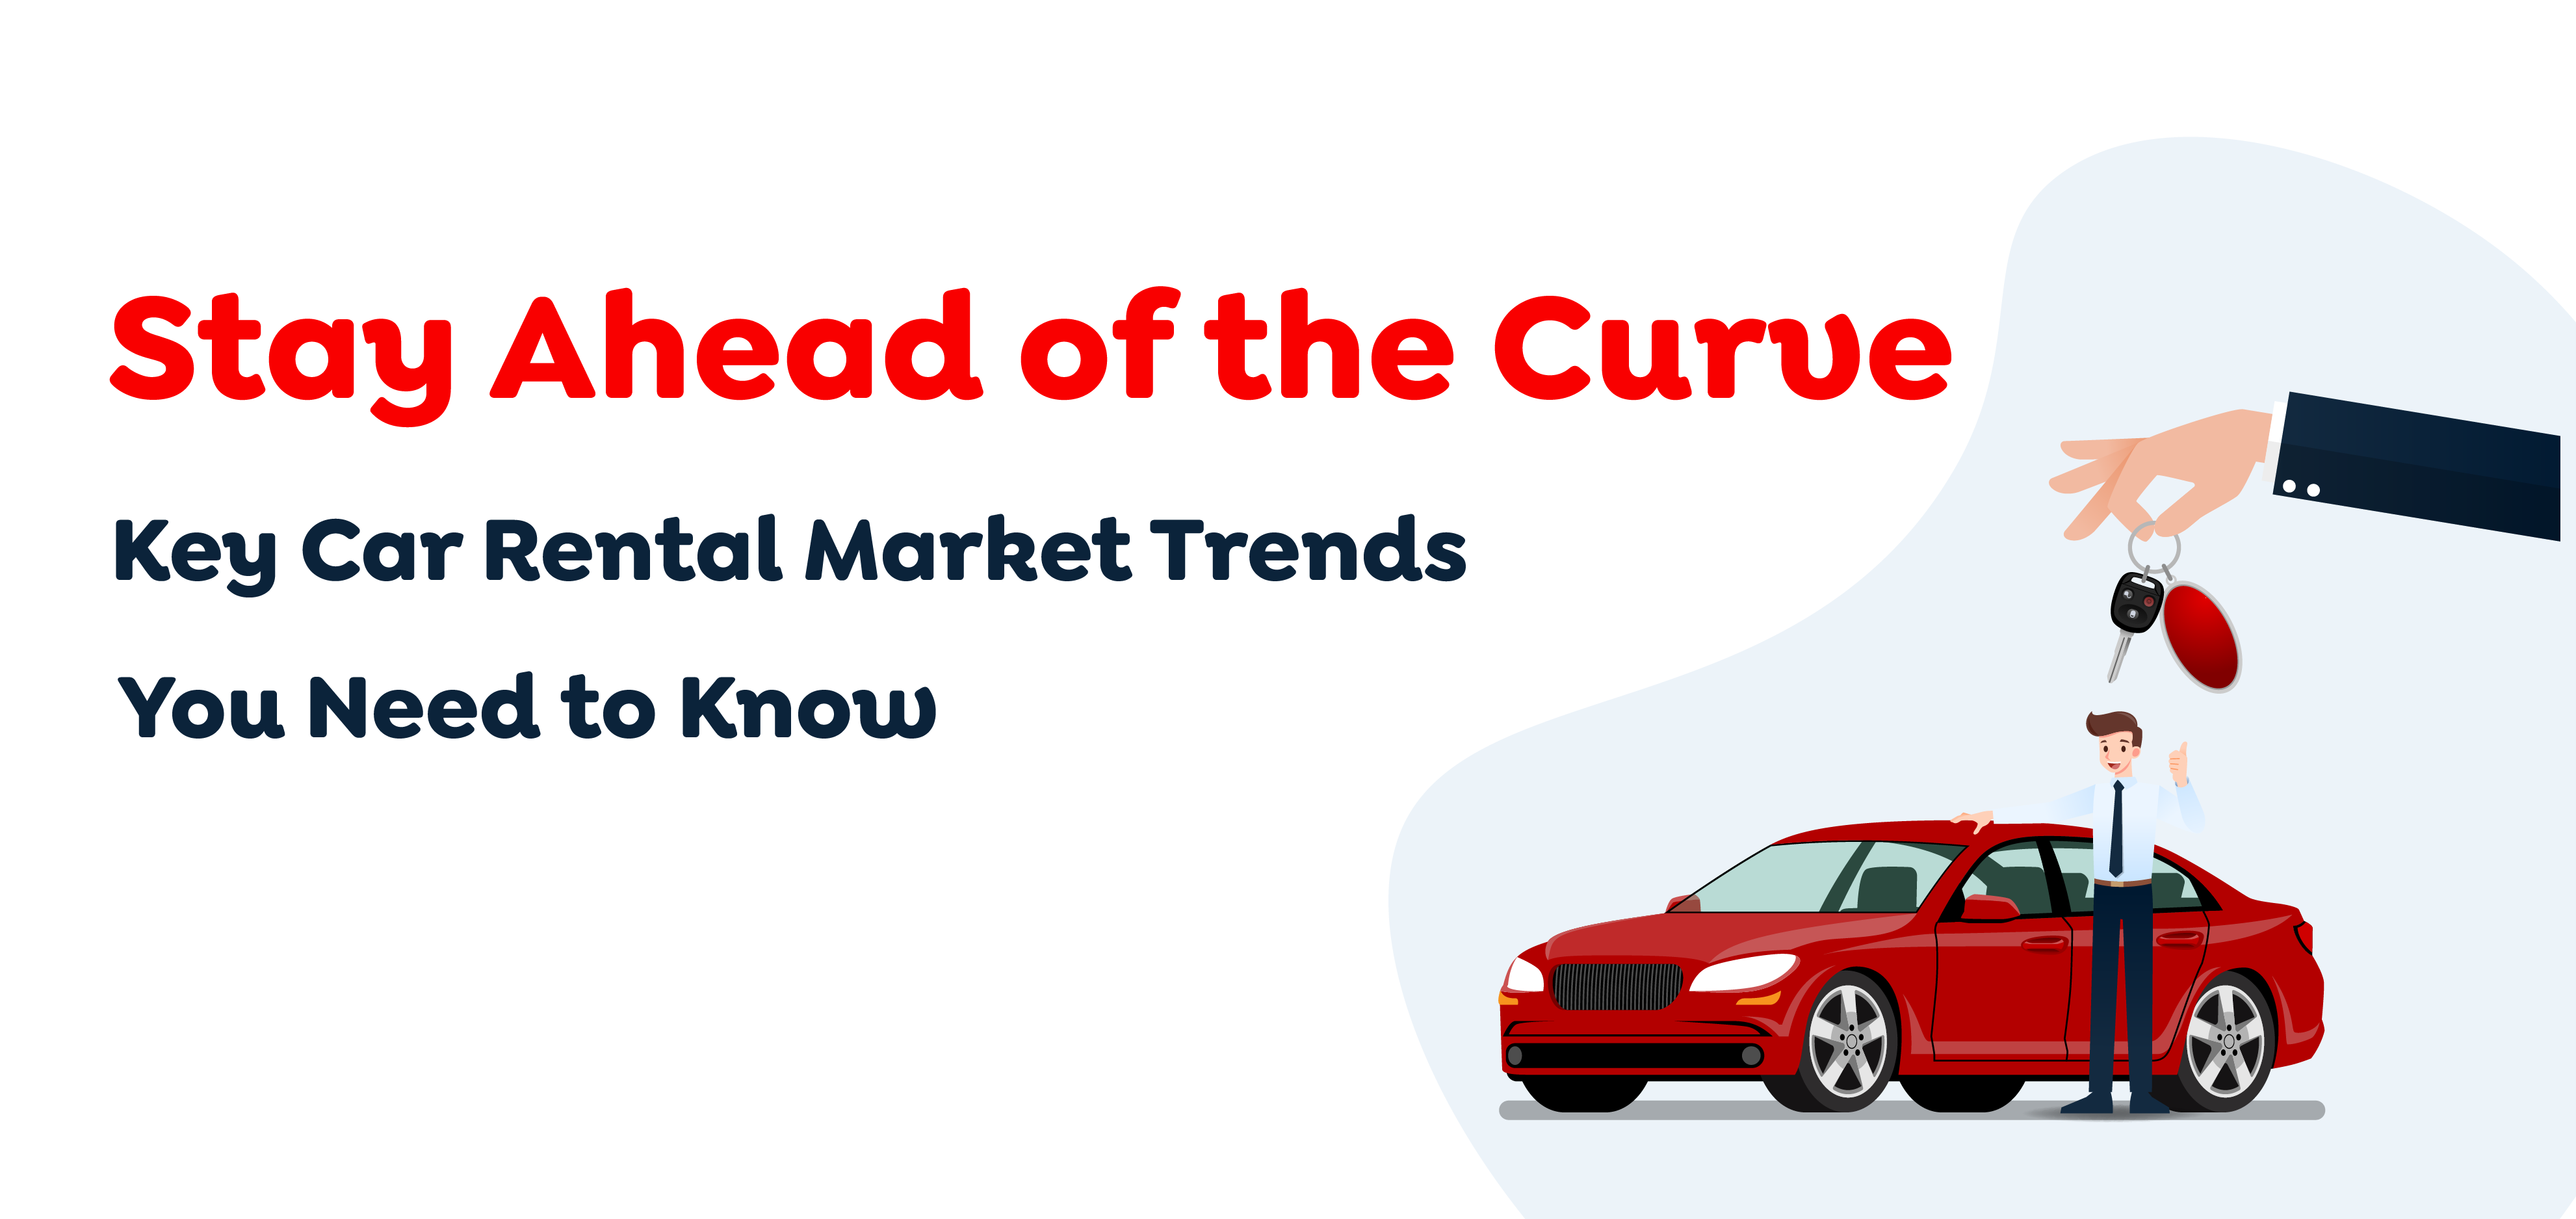 Key Car Rental Market Trends